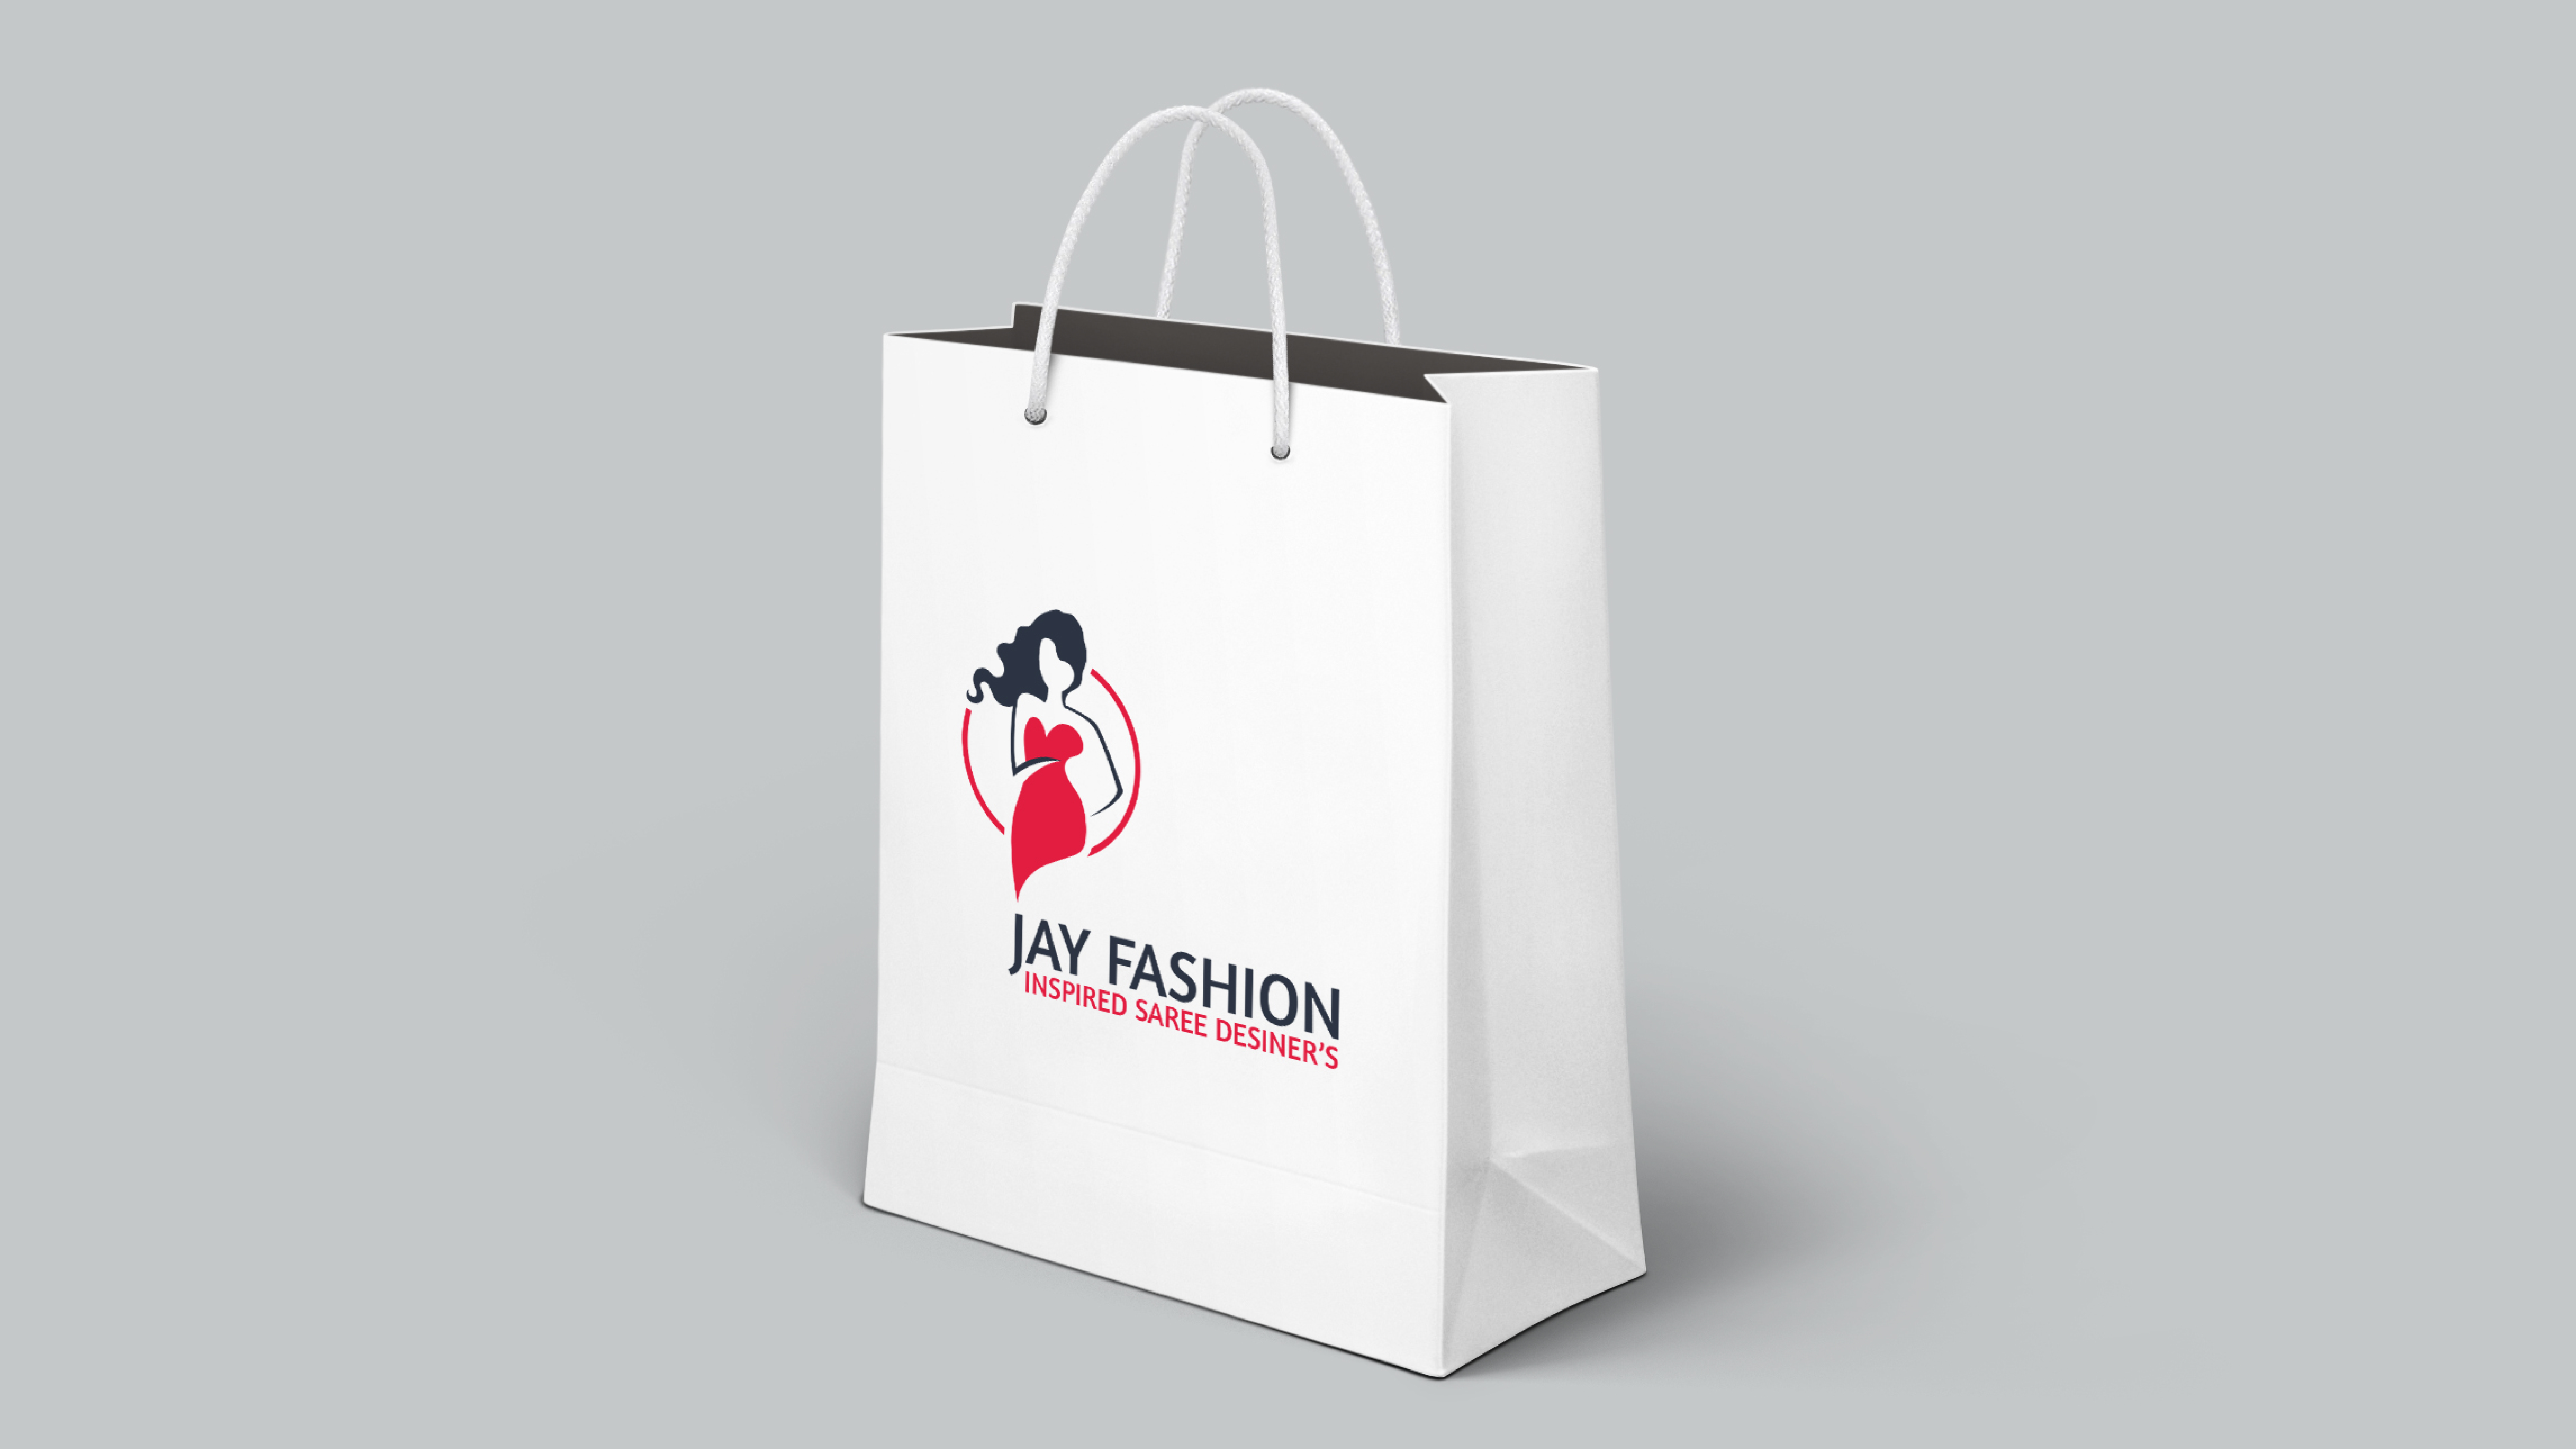 jay-fashion